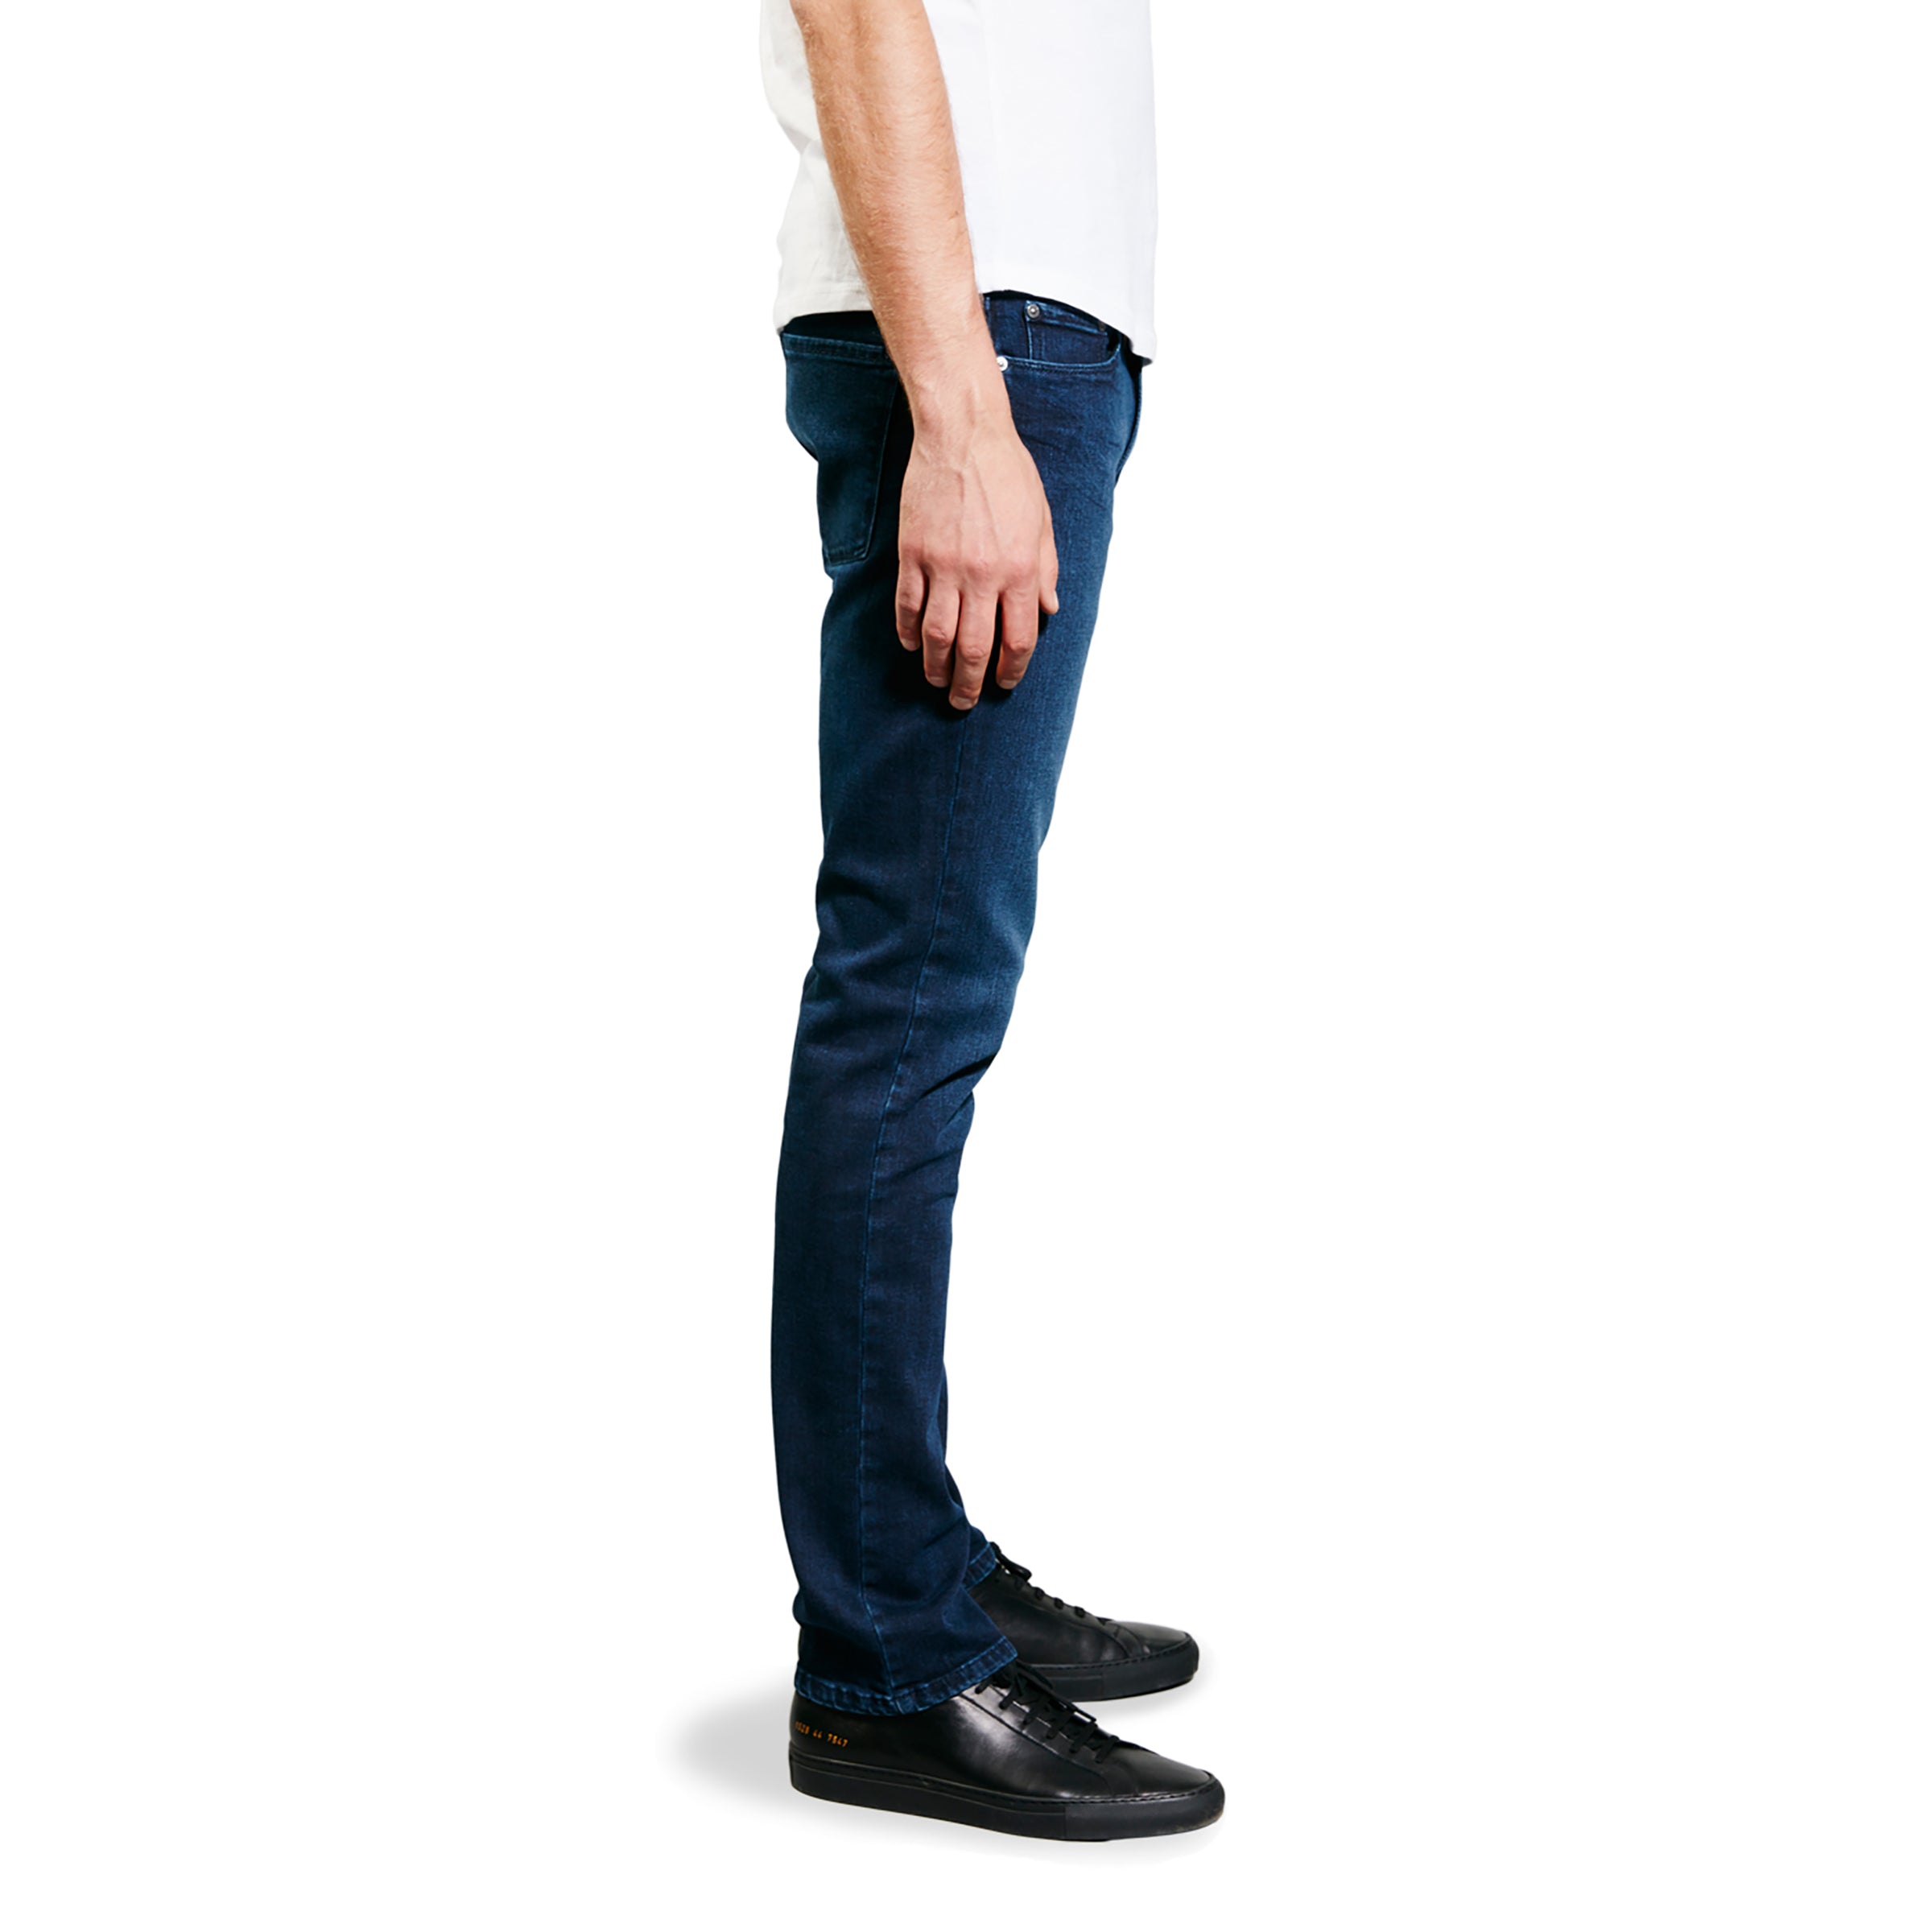 Men wearing Medium/Dark Blue Slim Staple Jeans